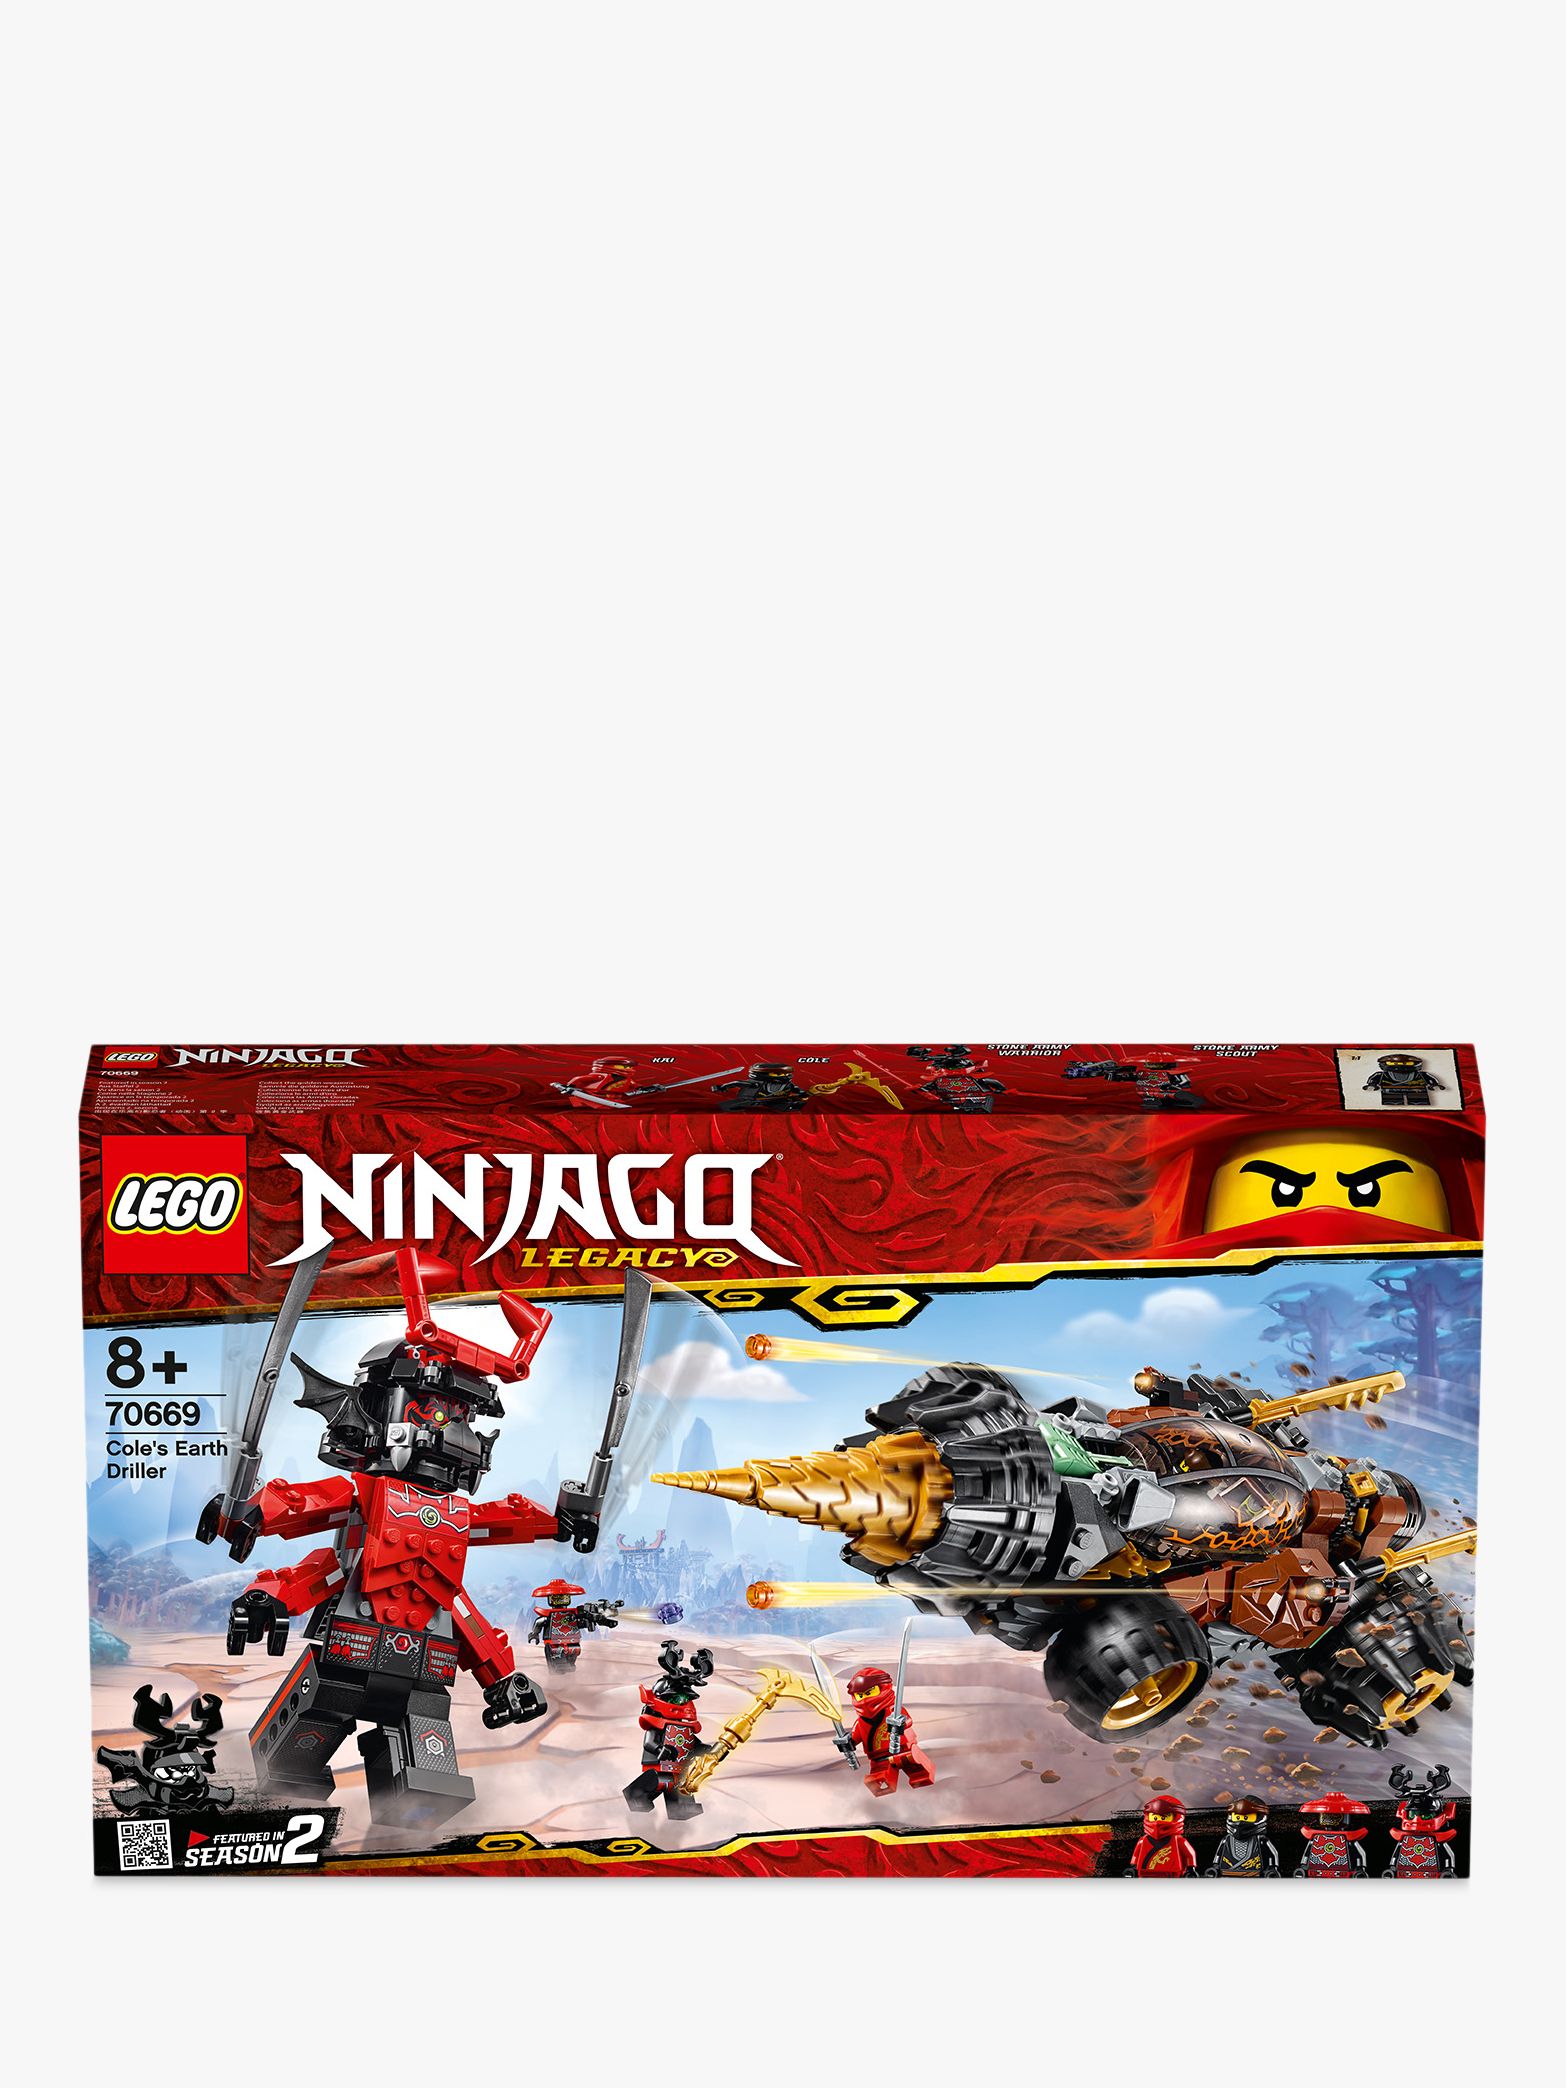 LEGO Ninjago 70669 Cole's Earth Driller